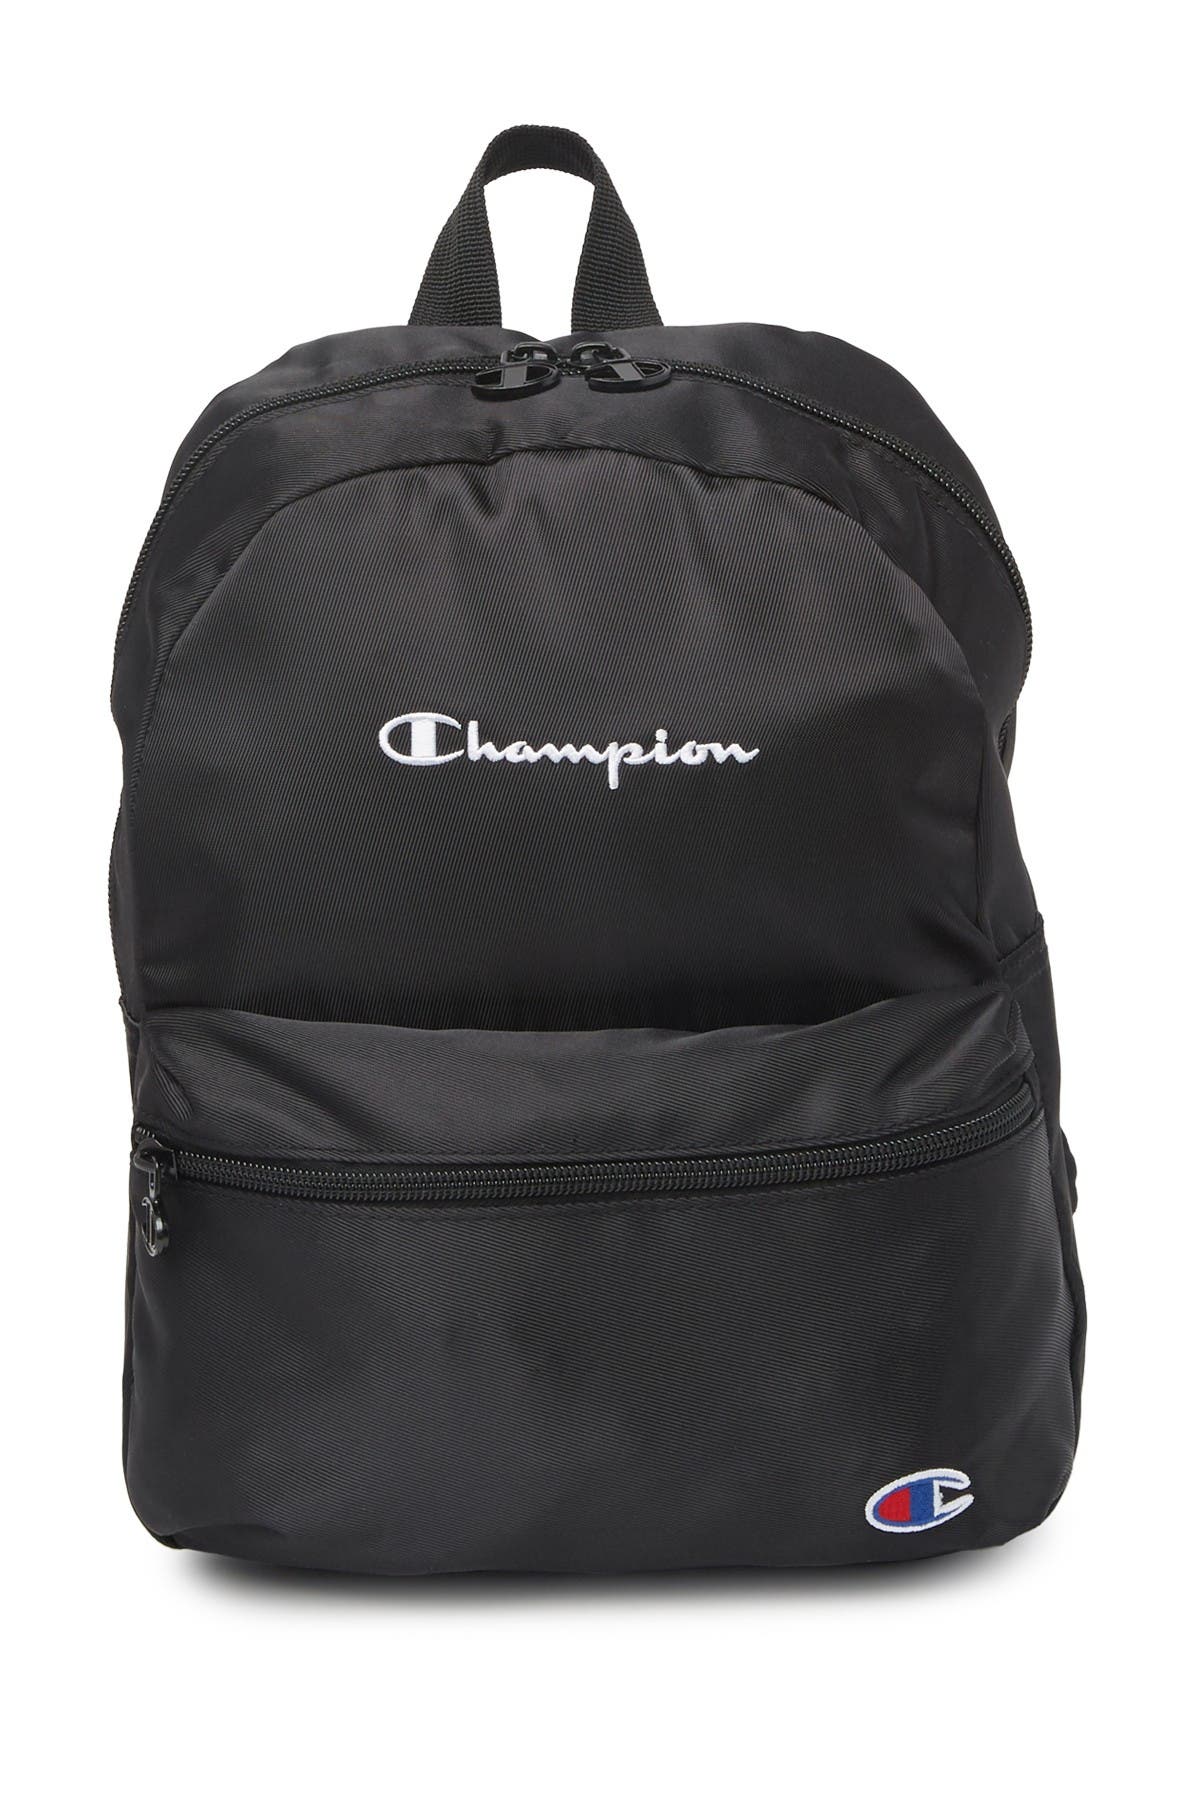 champion little bag